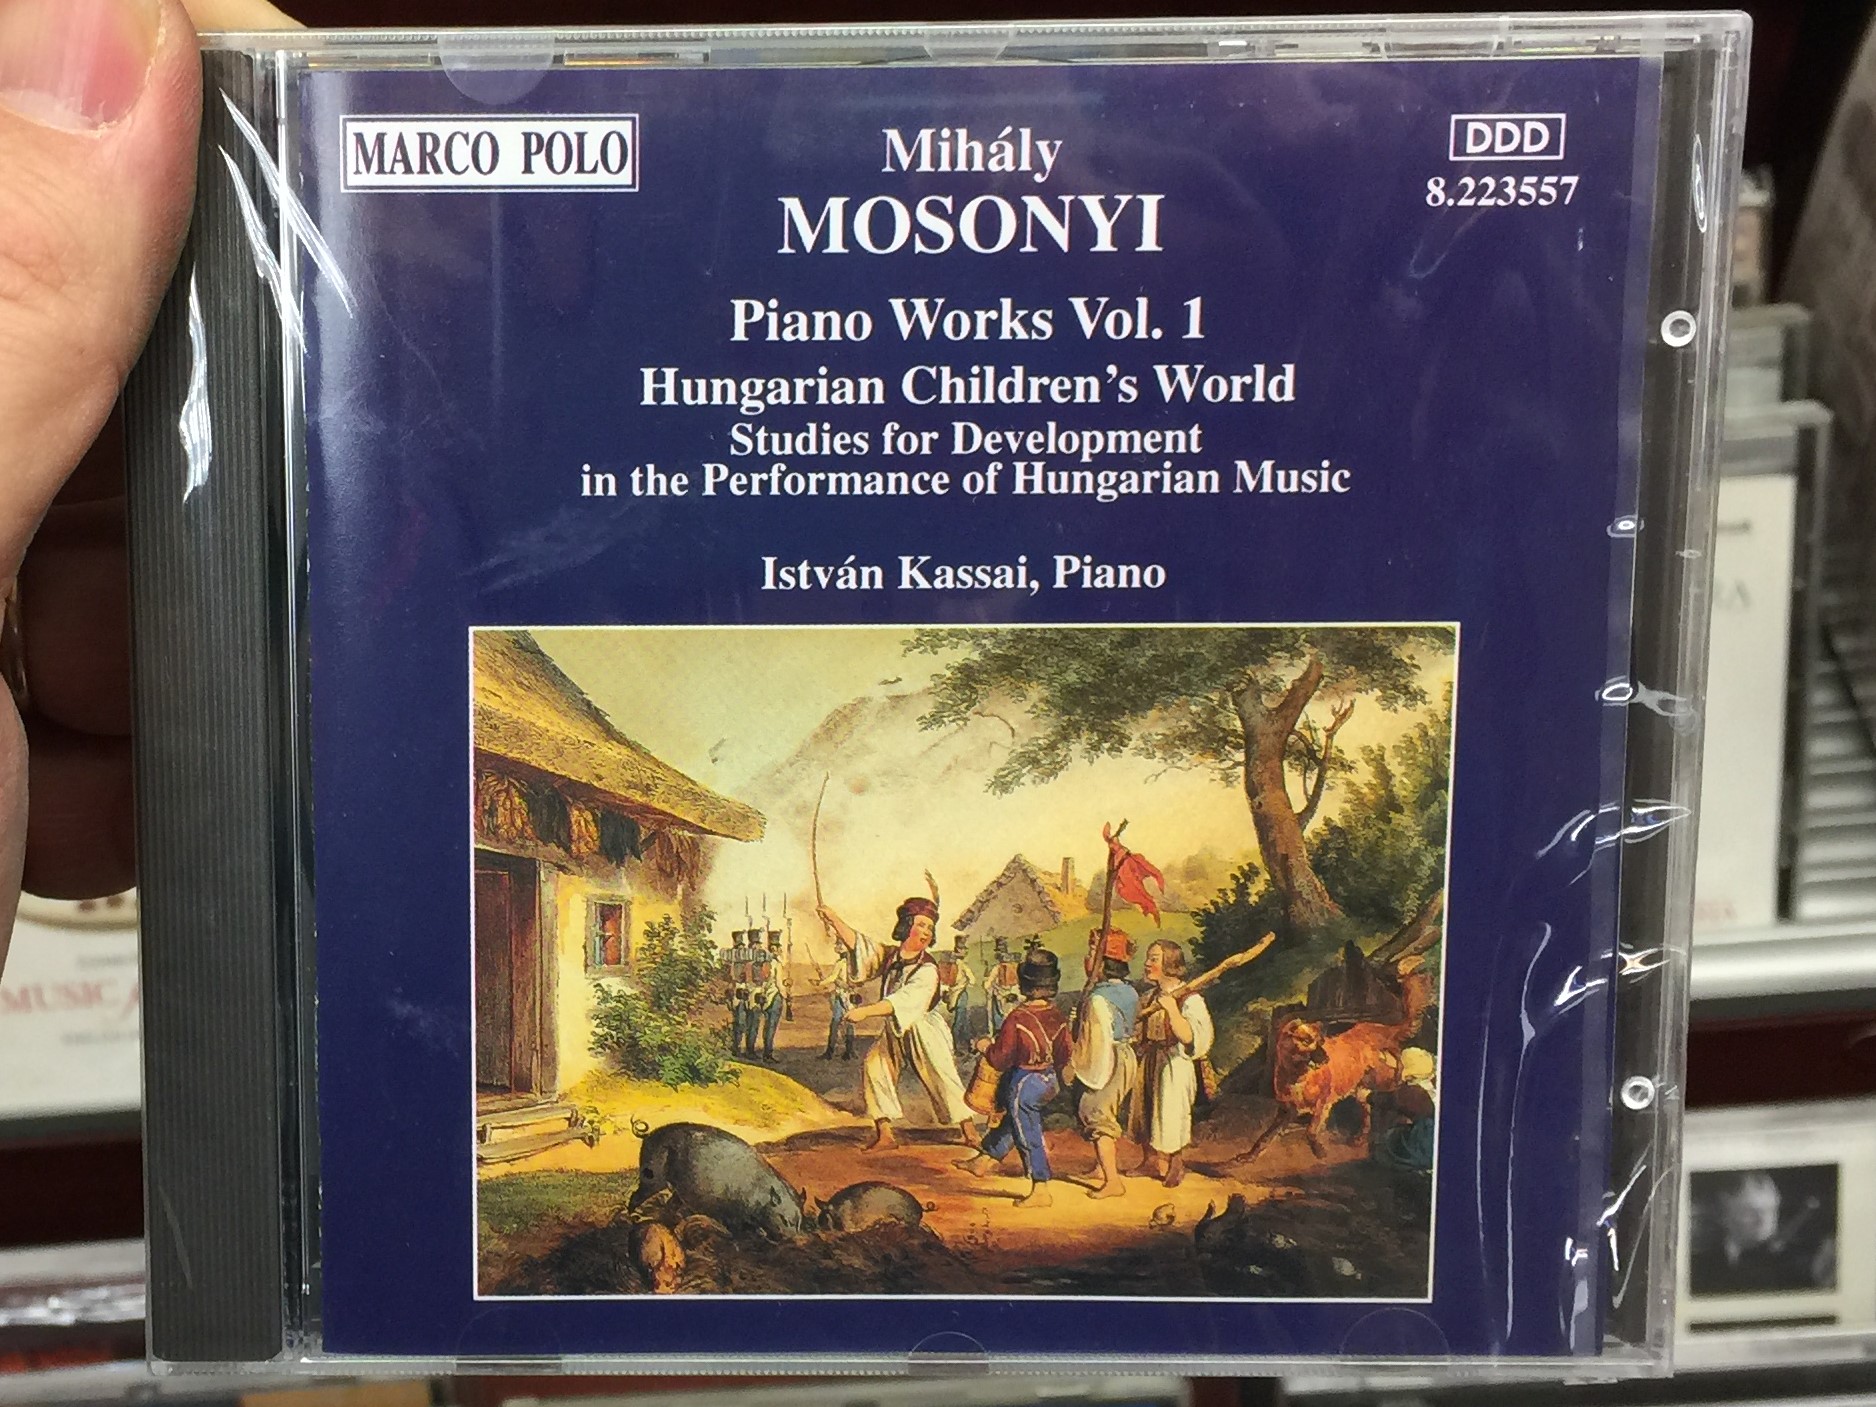 mihaly-mosonyi-piano-works-vol.-1-hungarian-children-s-world-studies-for-development-in-the-performance-of-hungarian-music-istvan-kassai-piano-hnh-international-ltd.-audio-cd-1994-stereo-8-1-.jpg